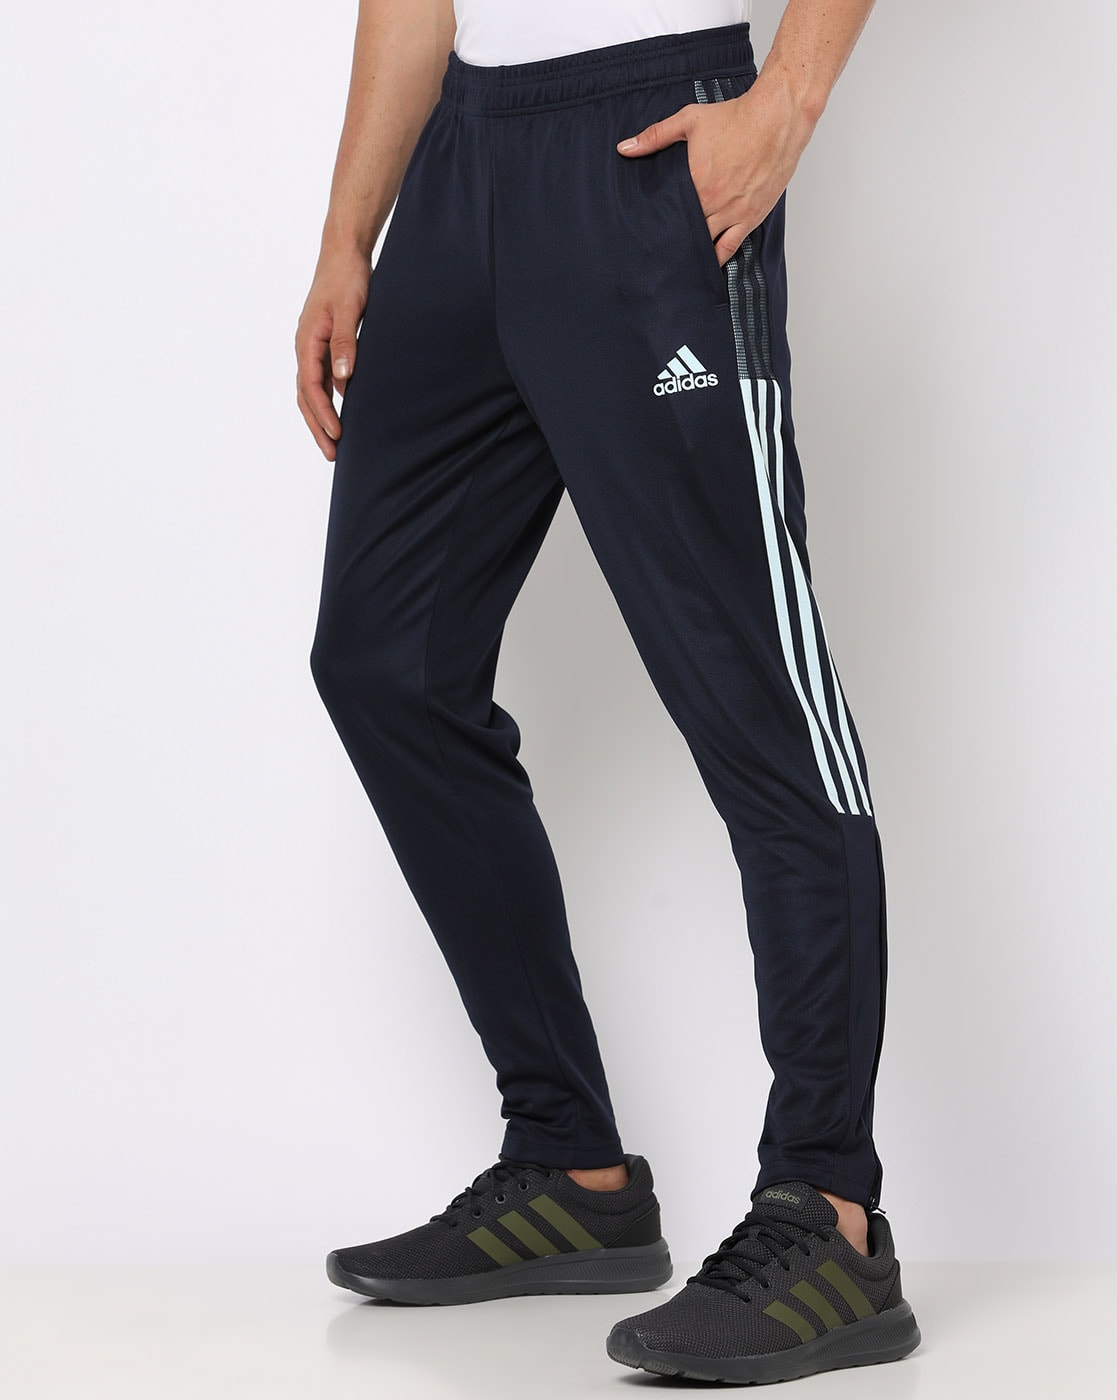 adidas mens Core 18 AEROREADY Slim Fit Full Length Soccer Training Joggers  Sweatpants Dark Grey HeatherBlack 3XL  Amazonin Clothing  Accessories